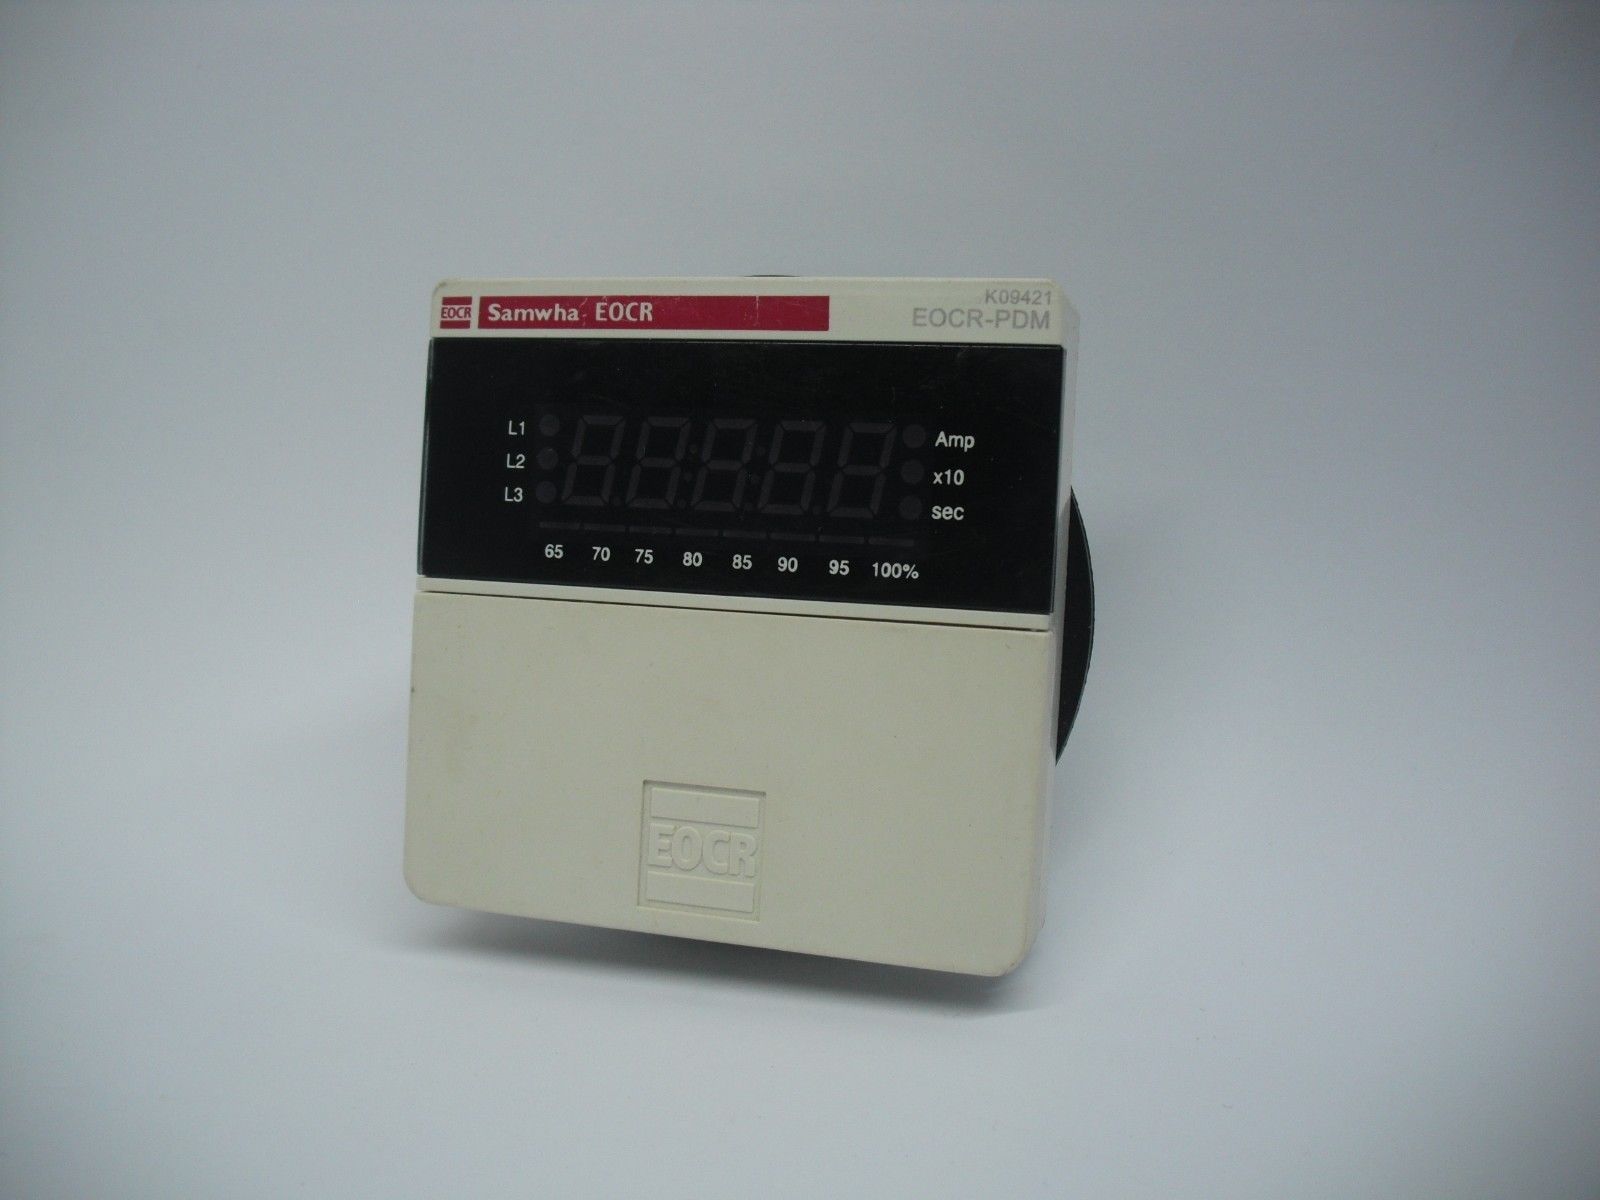 Samwha EOCR-PDM K09421 Keypad / Panel Interface EOCR-PDM,其他品牌,PLC